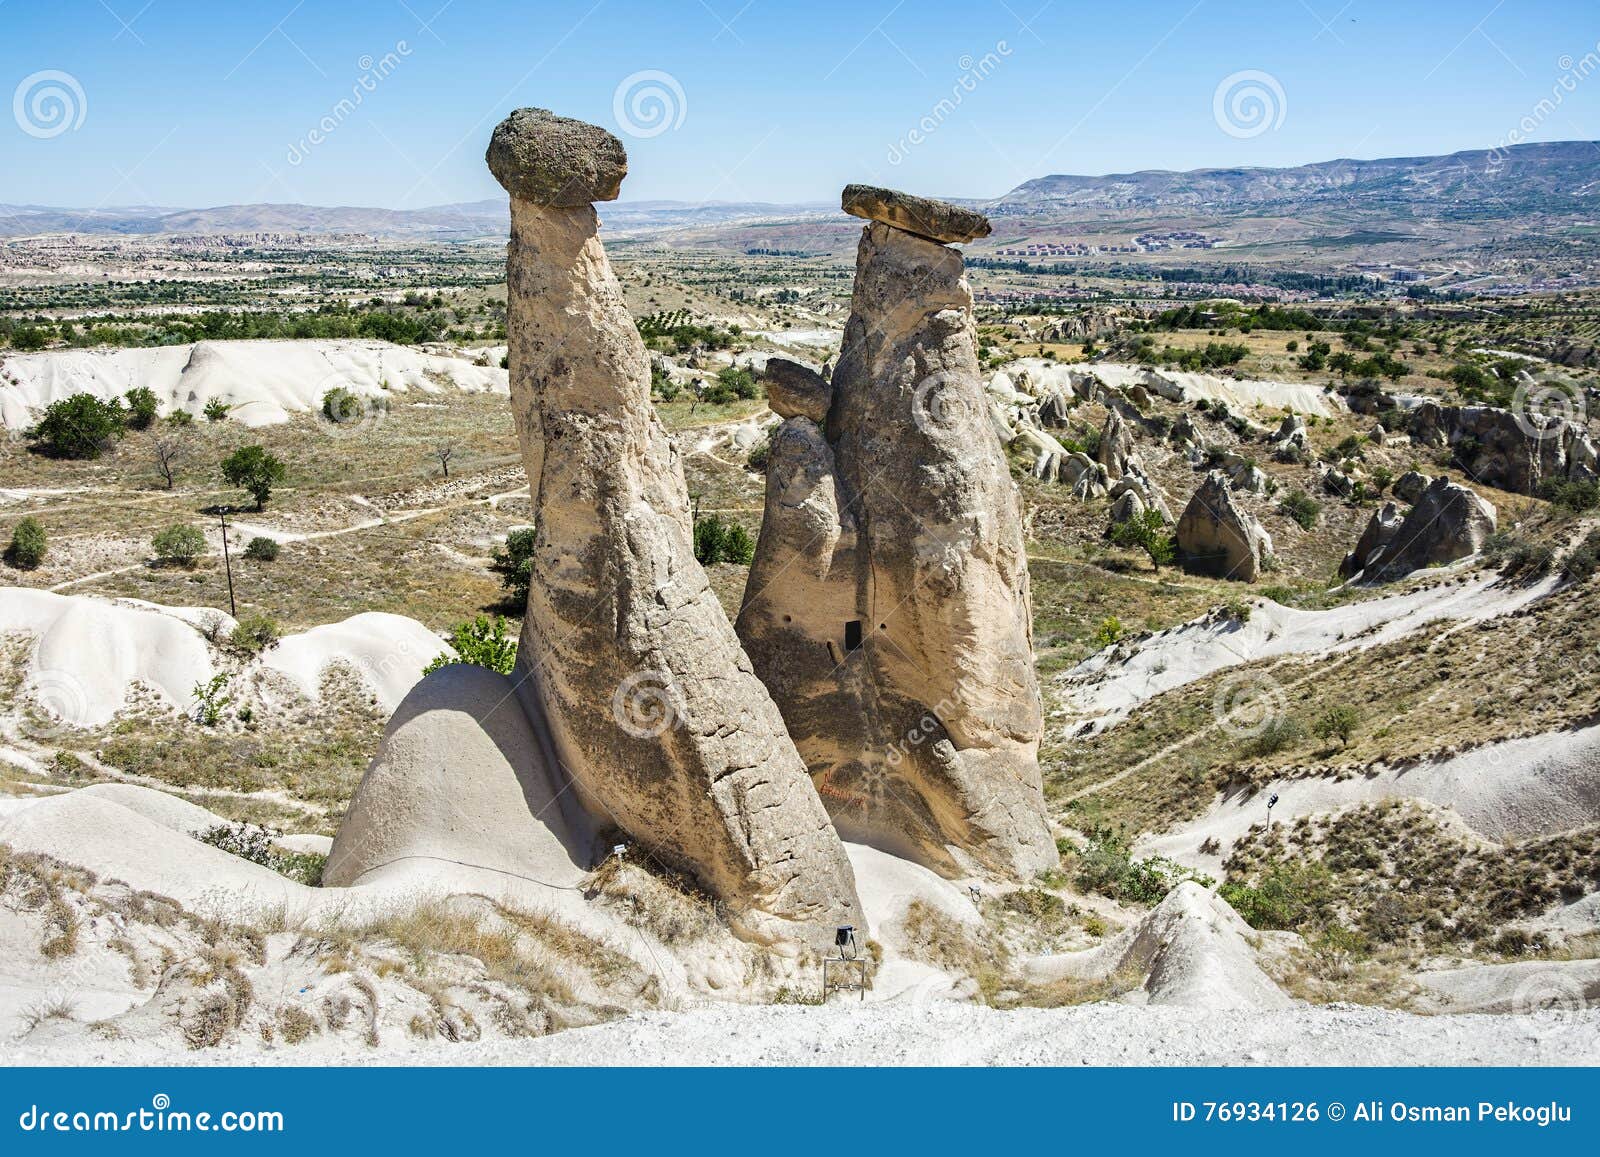 three graces rock formation near urgup in cappadocia,